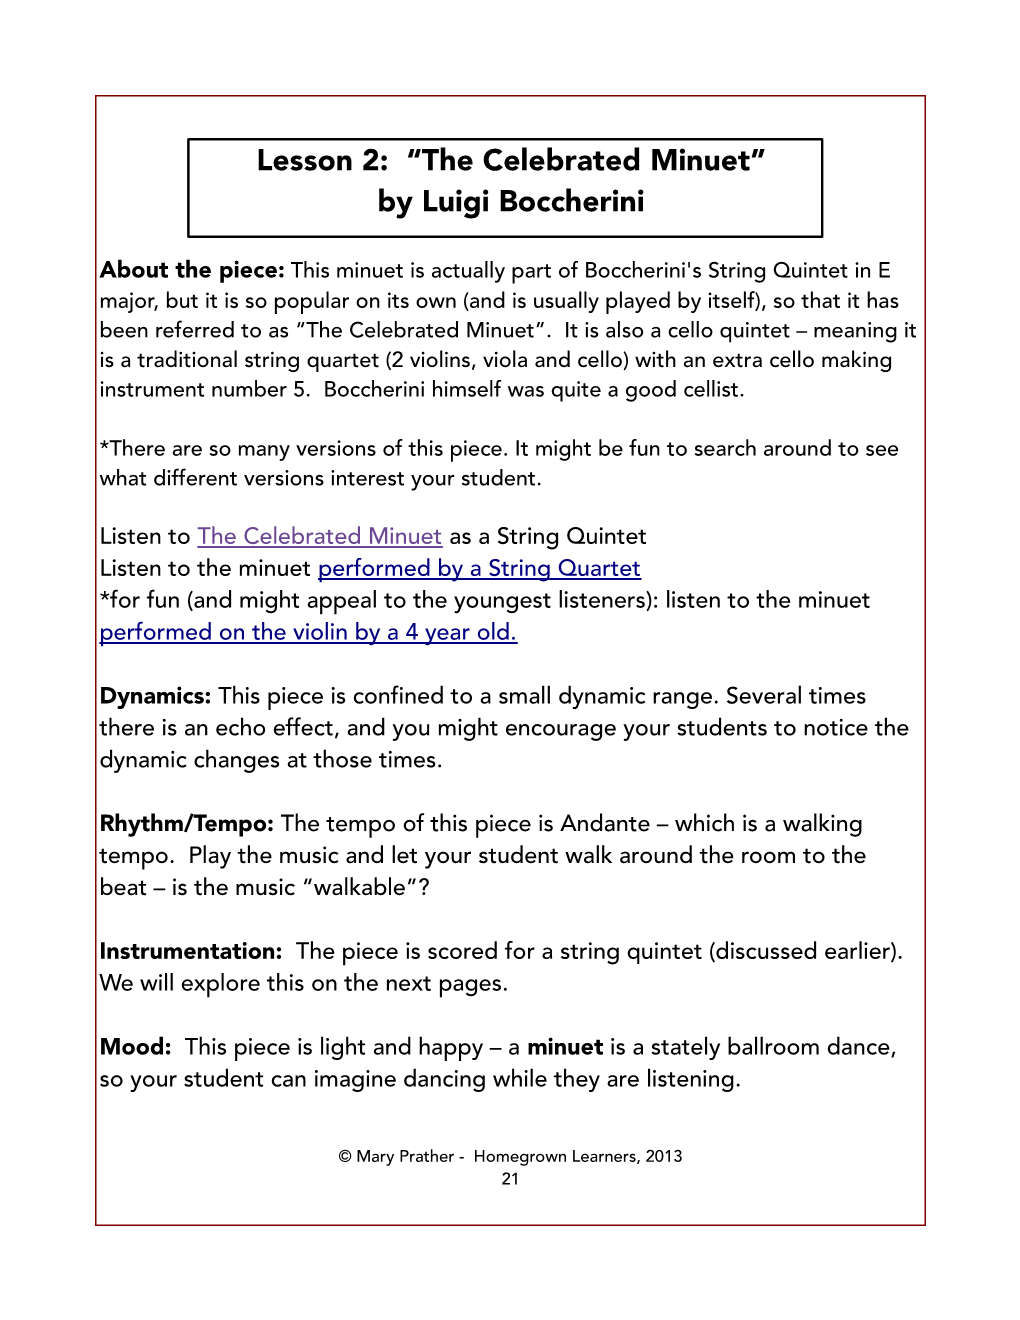 Lesson 2: “The Celebrated Minuet” by Luigi Boccherini